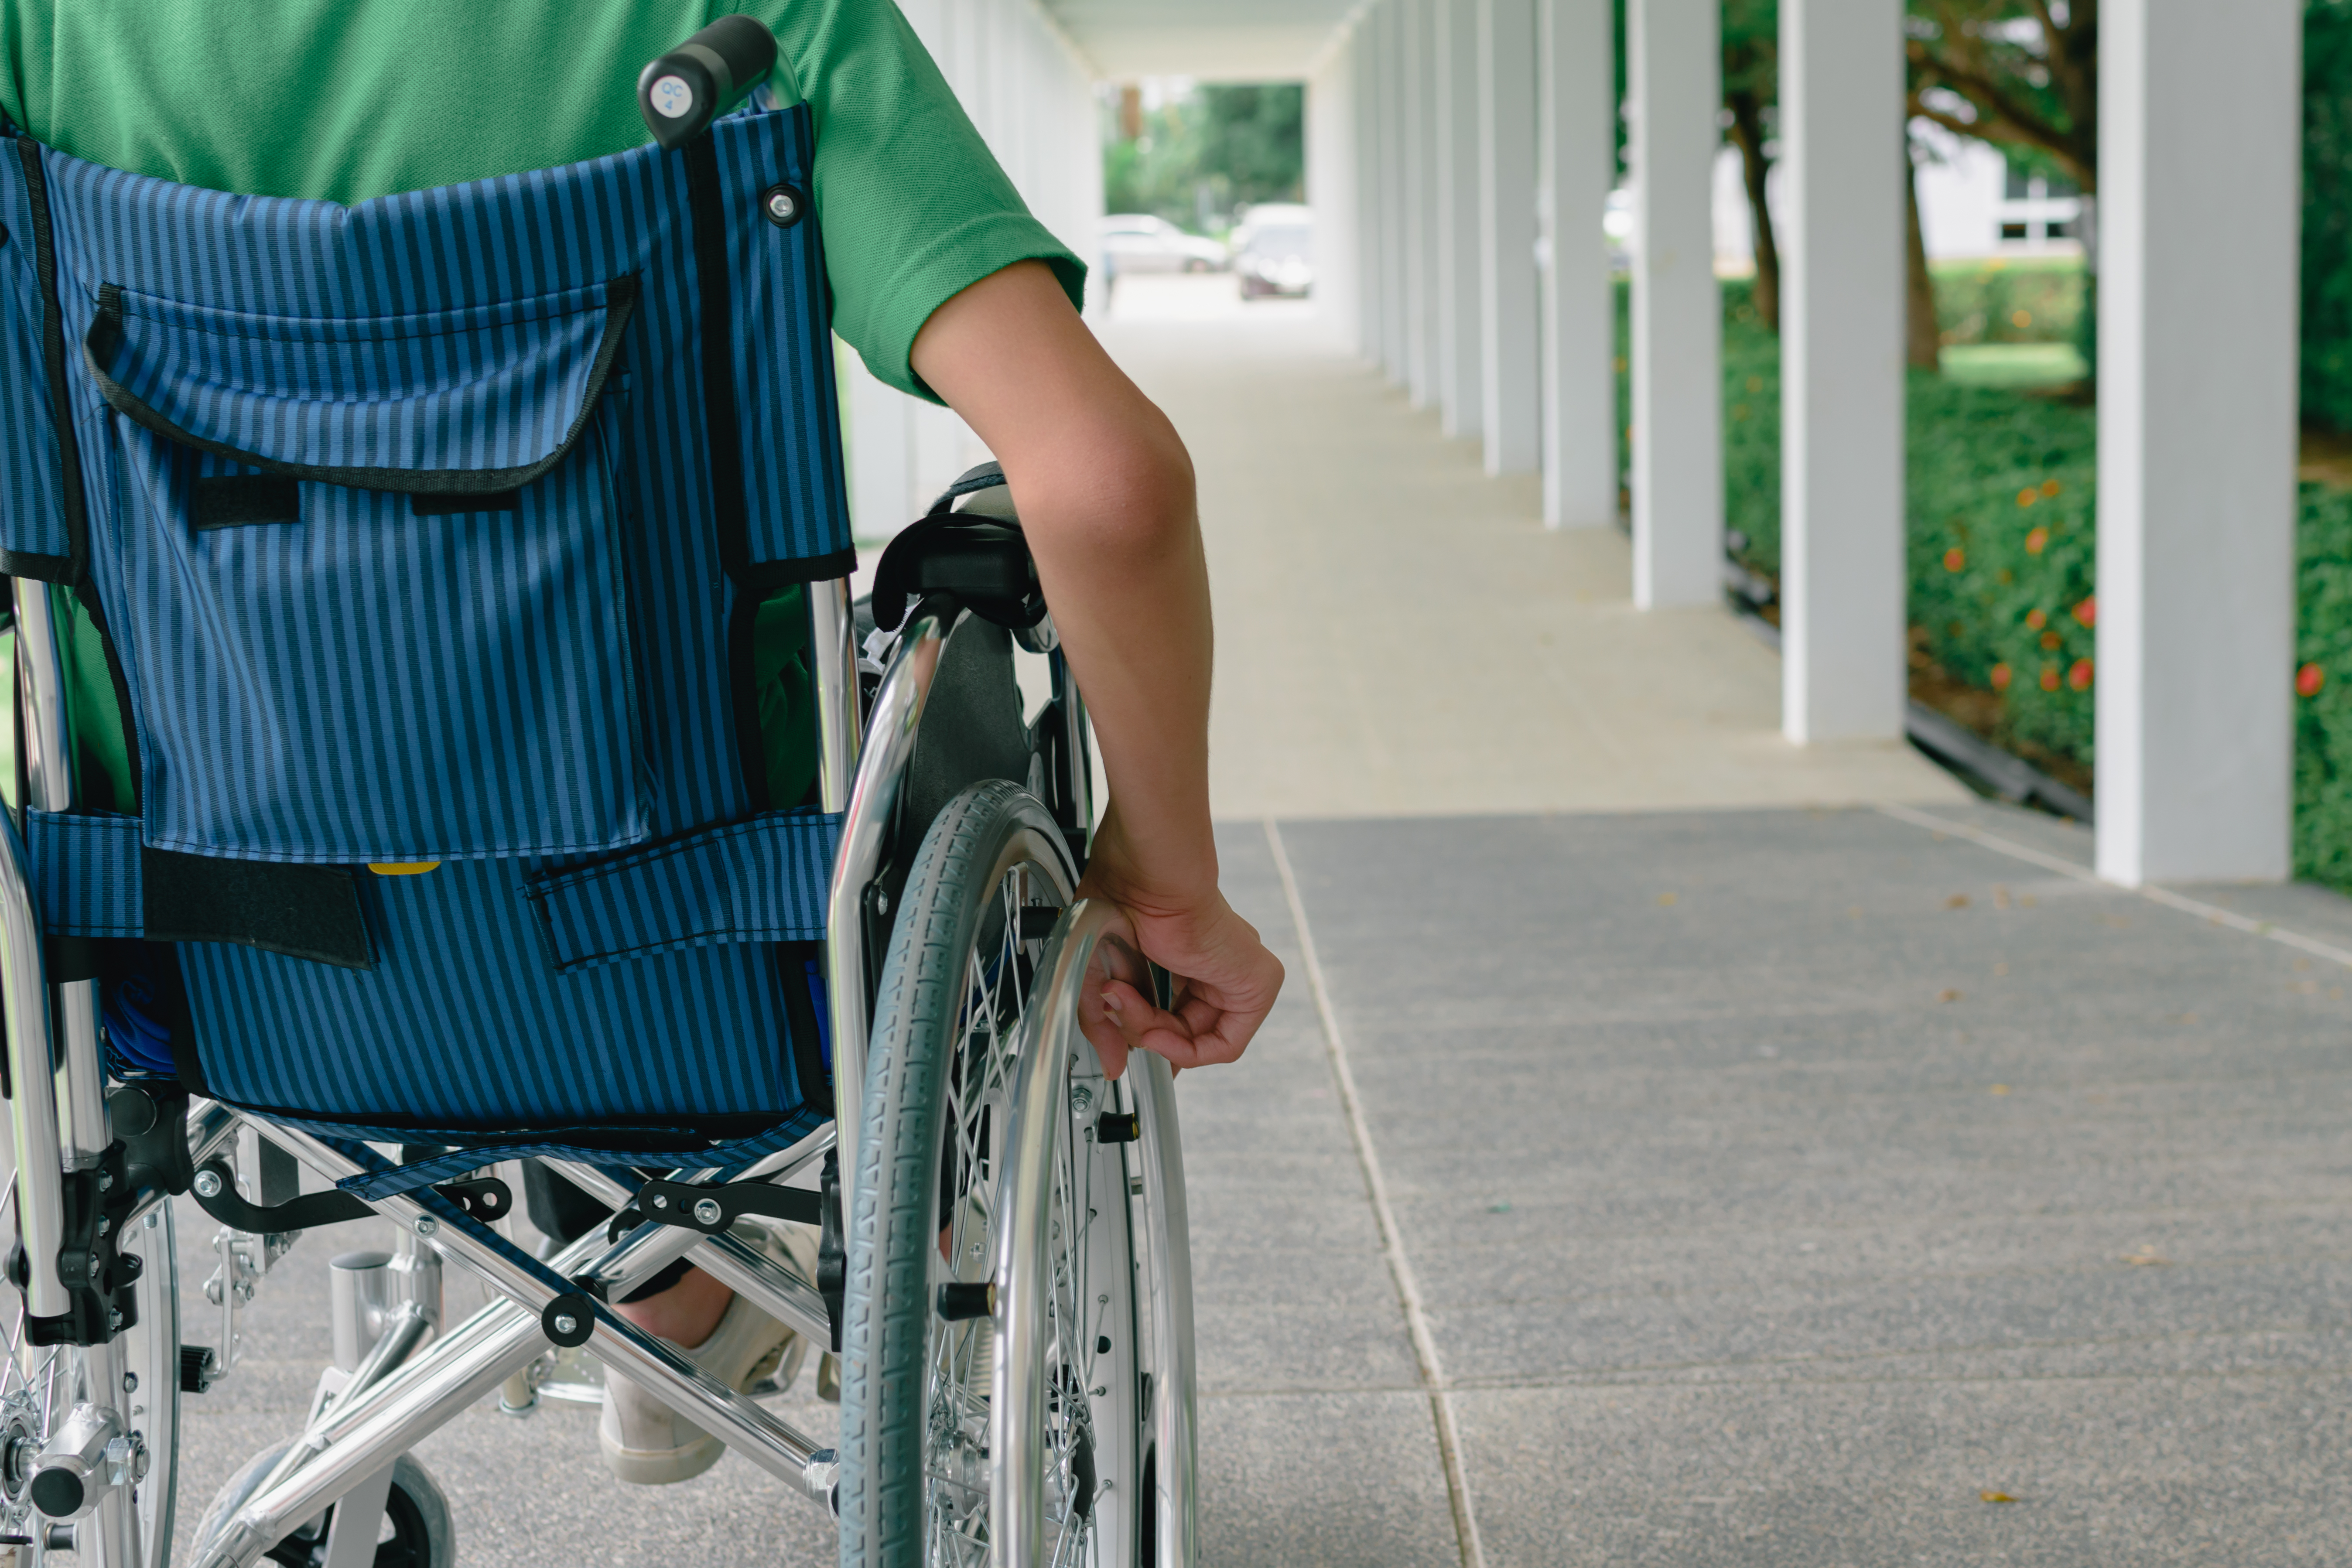 Boy in a wheelchair | Source: Shutterstock.com